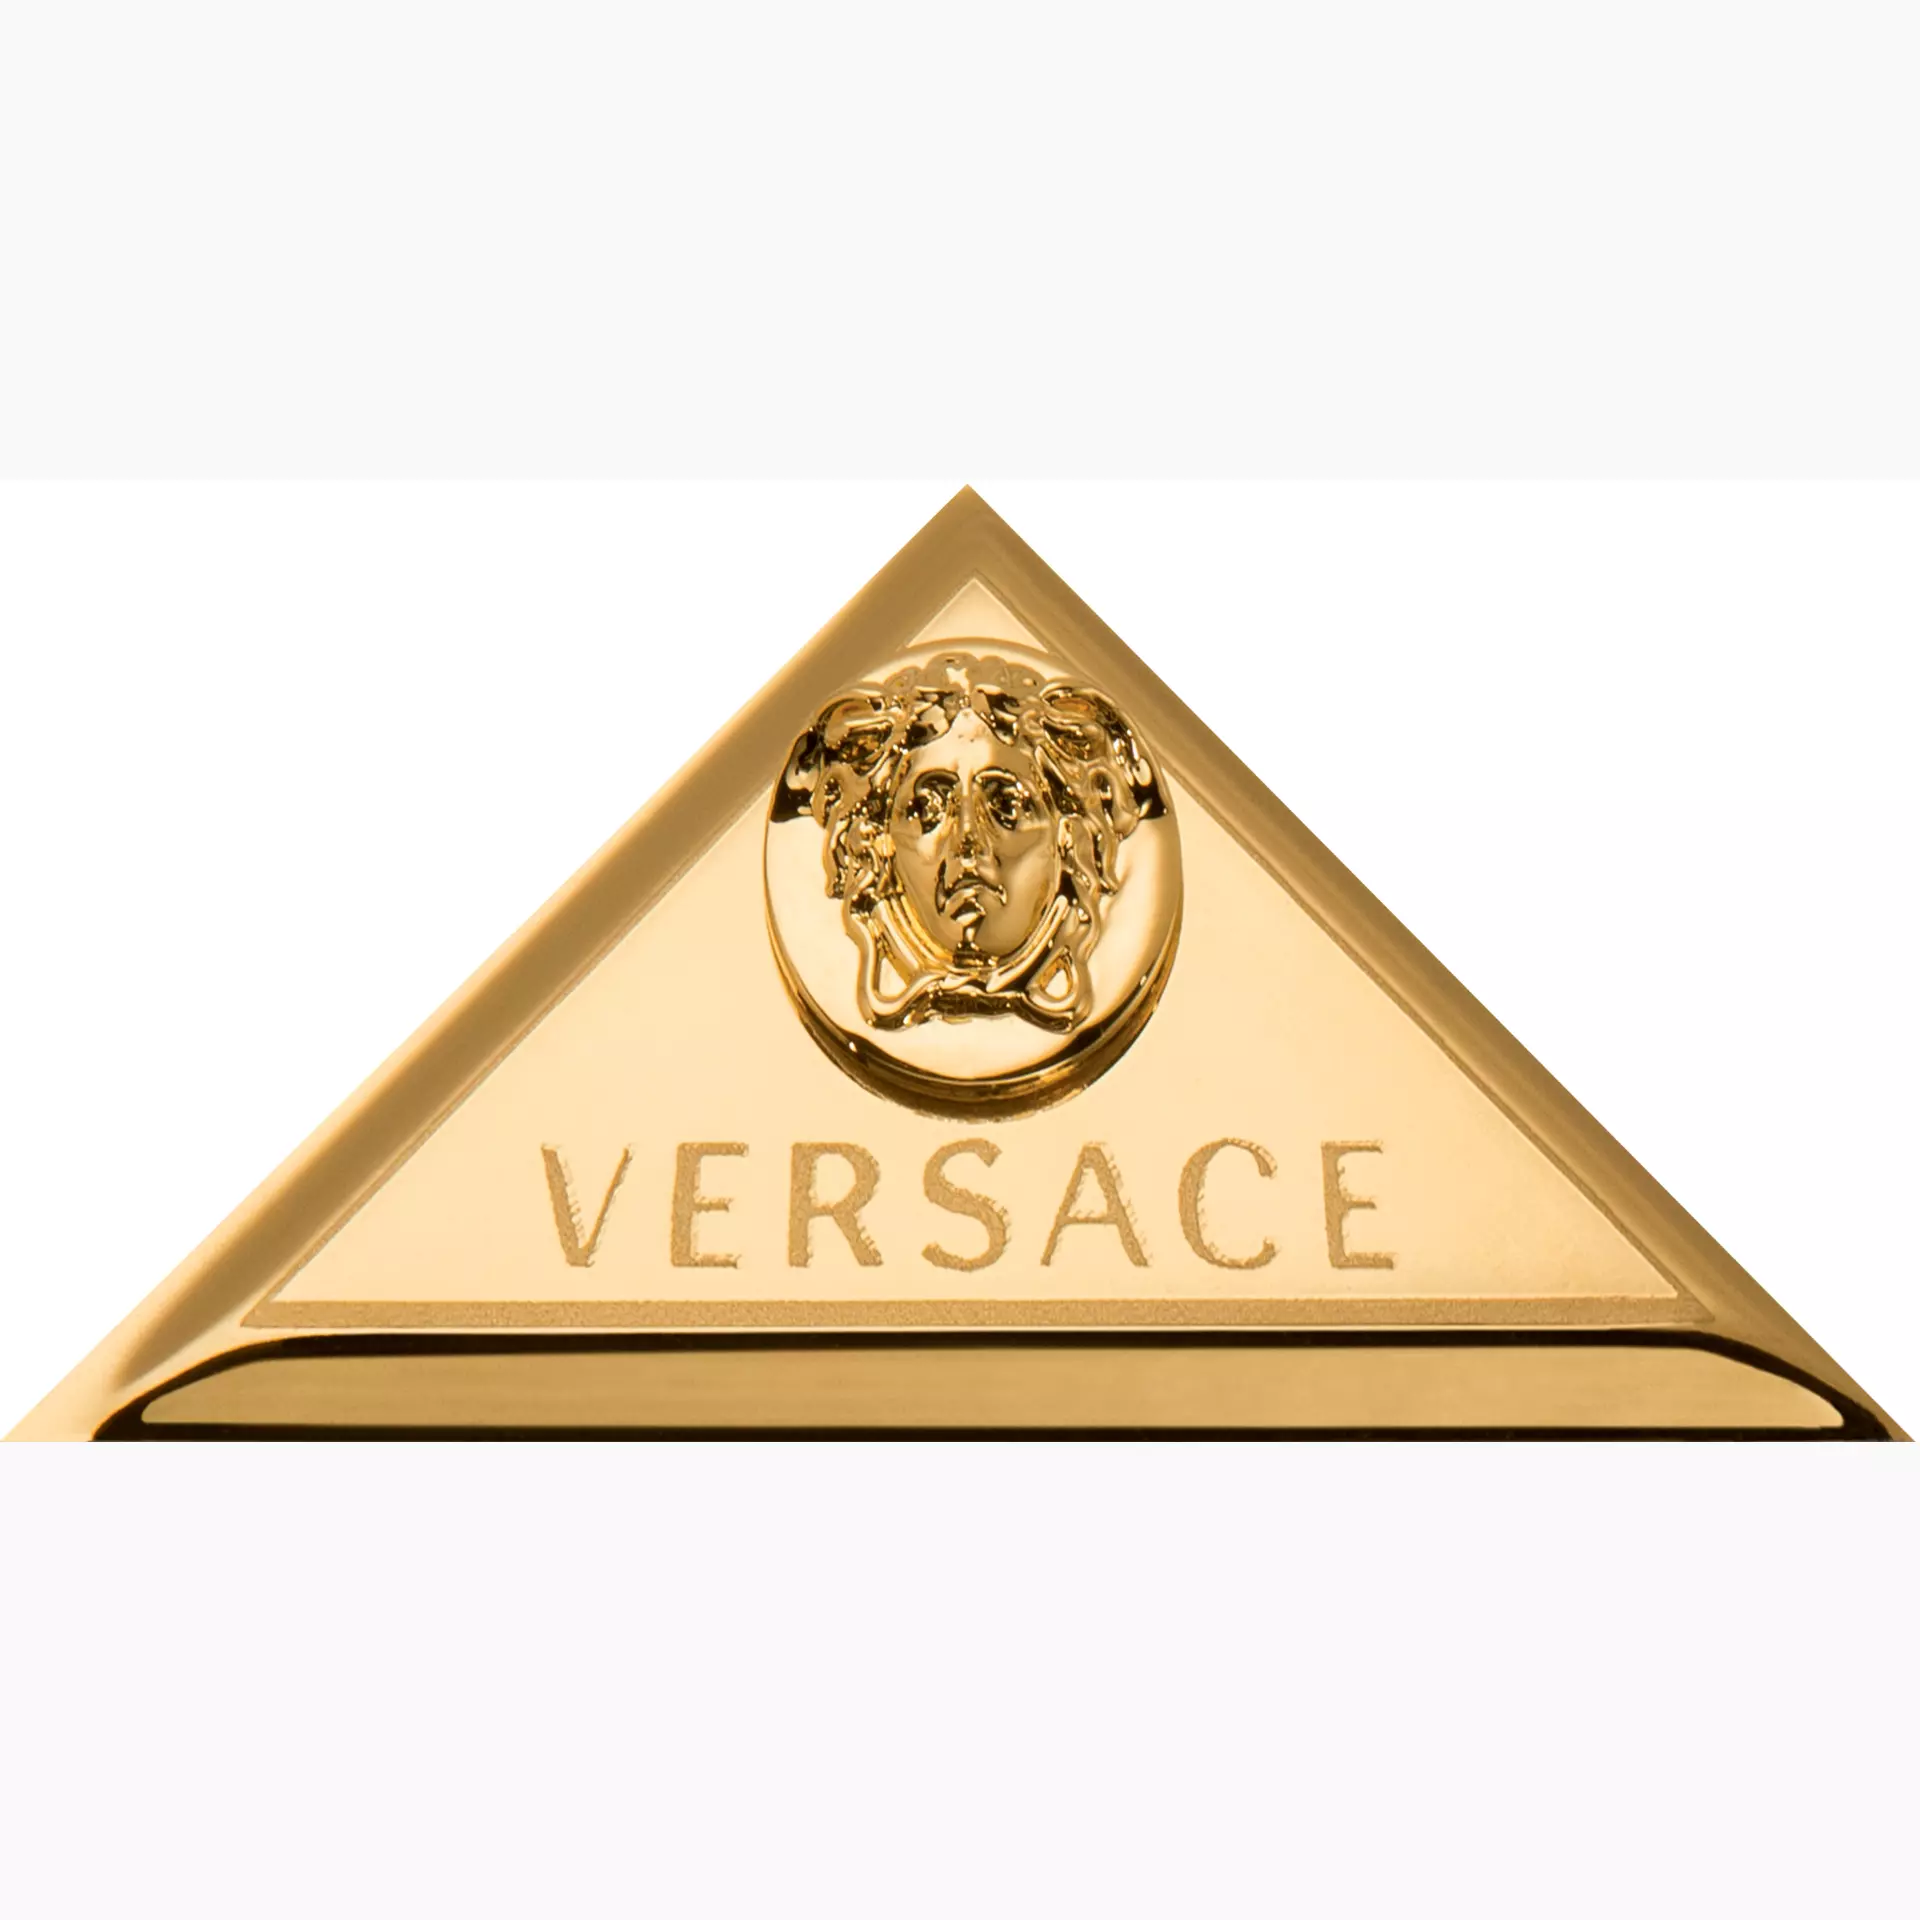 Versace Firma Gold Pvd Naturale Gold Pvd G0068970 4,5x8,7cm Triangolo Medusa